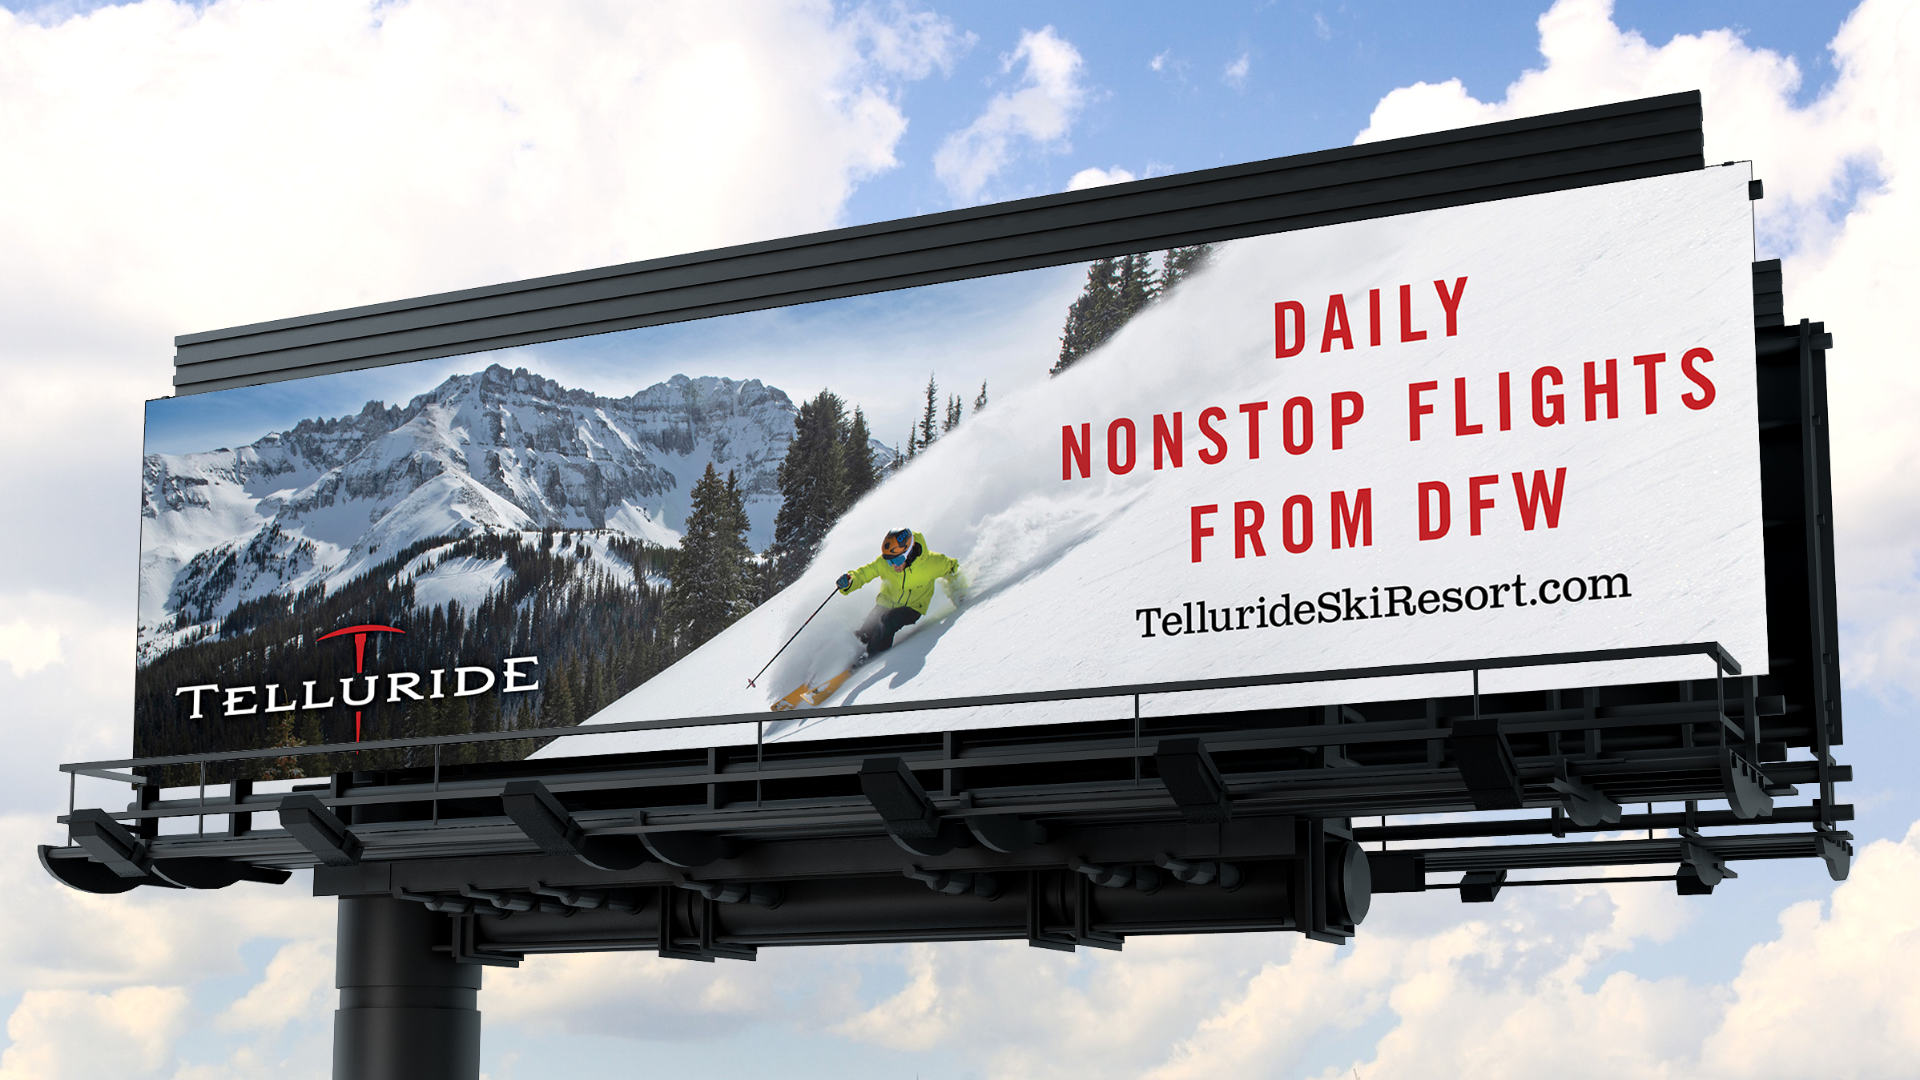 1920 Telluride billboard mockup Daily nonstop flights from DFW